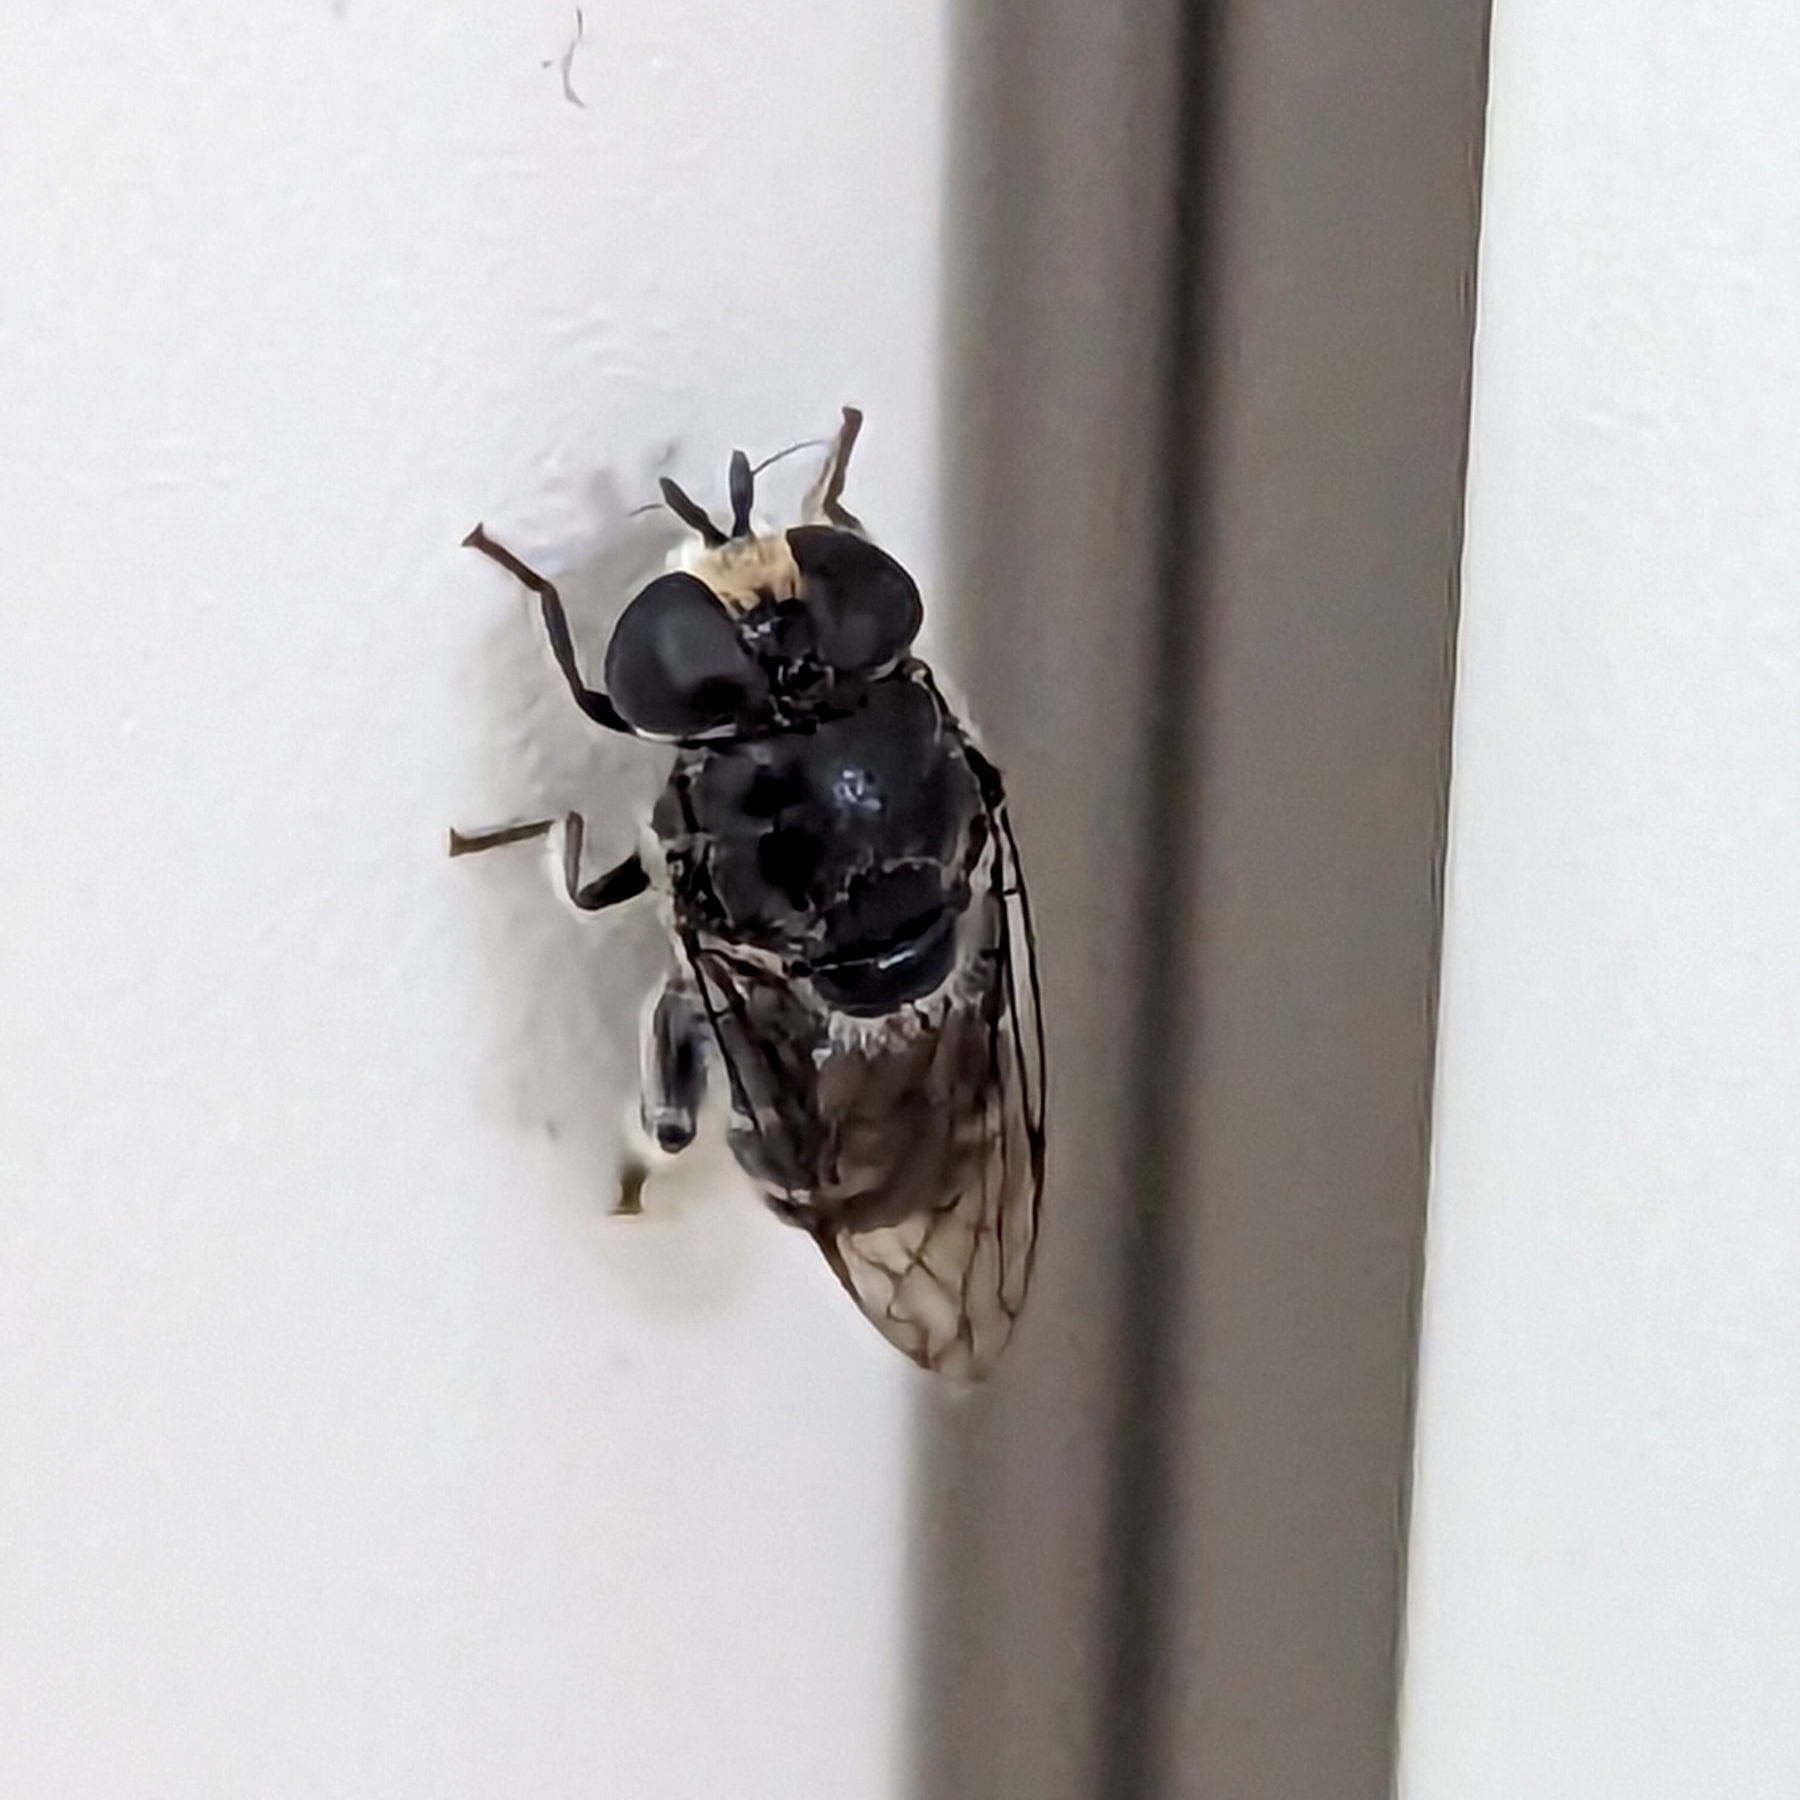 Aclose up shot of anAustralian native bee on a wall.